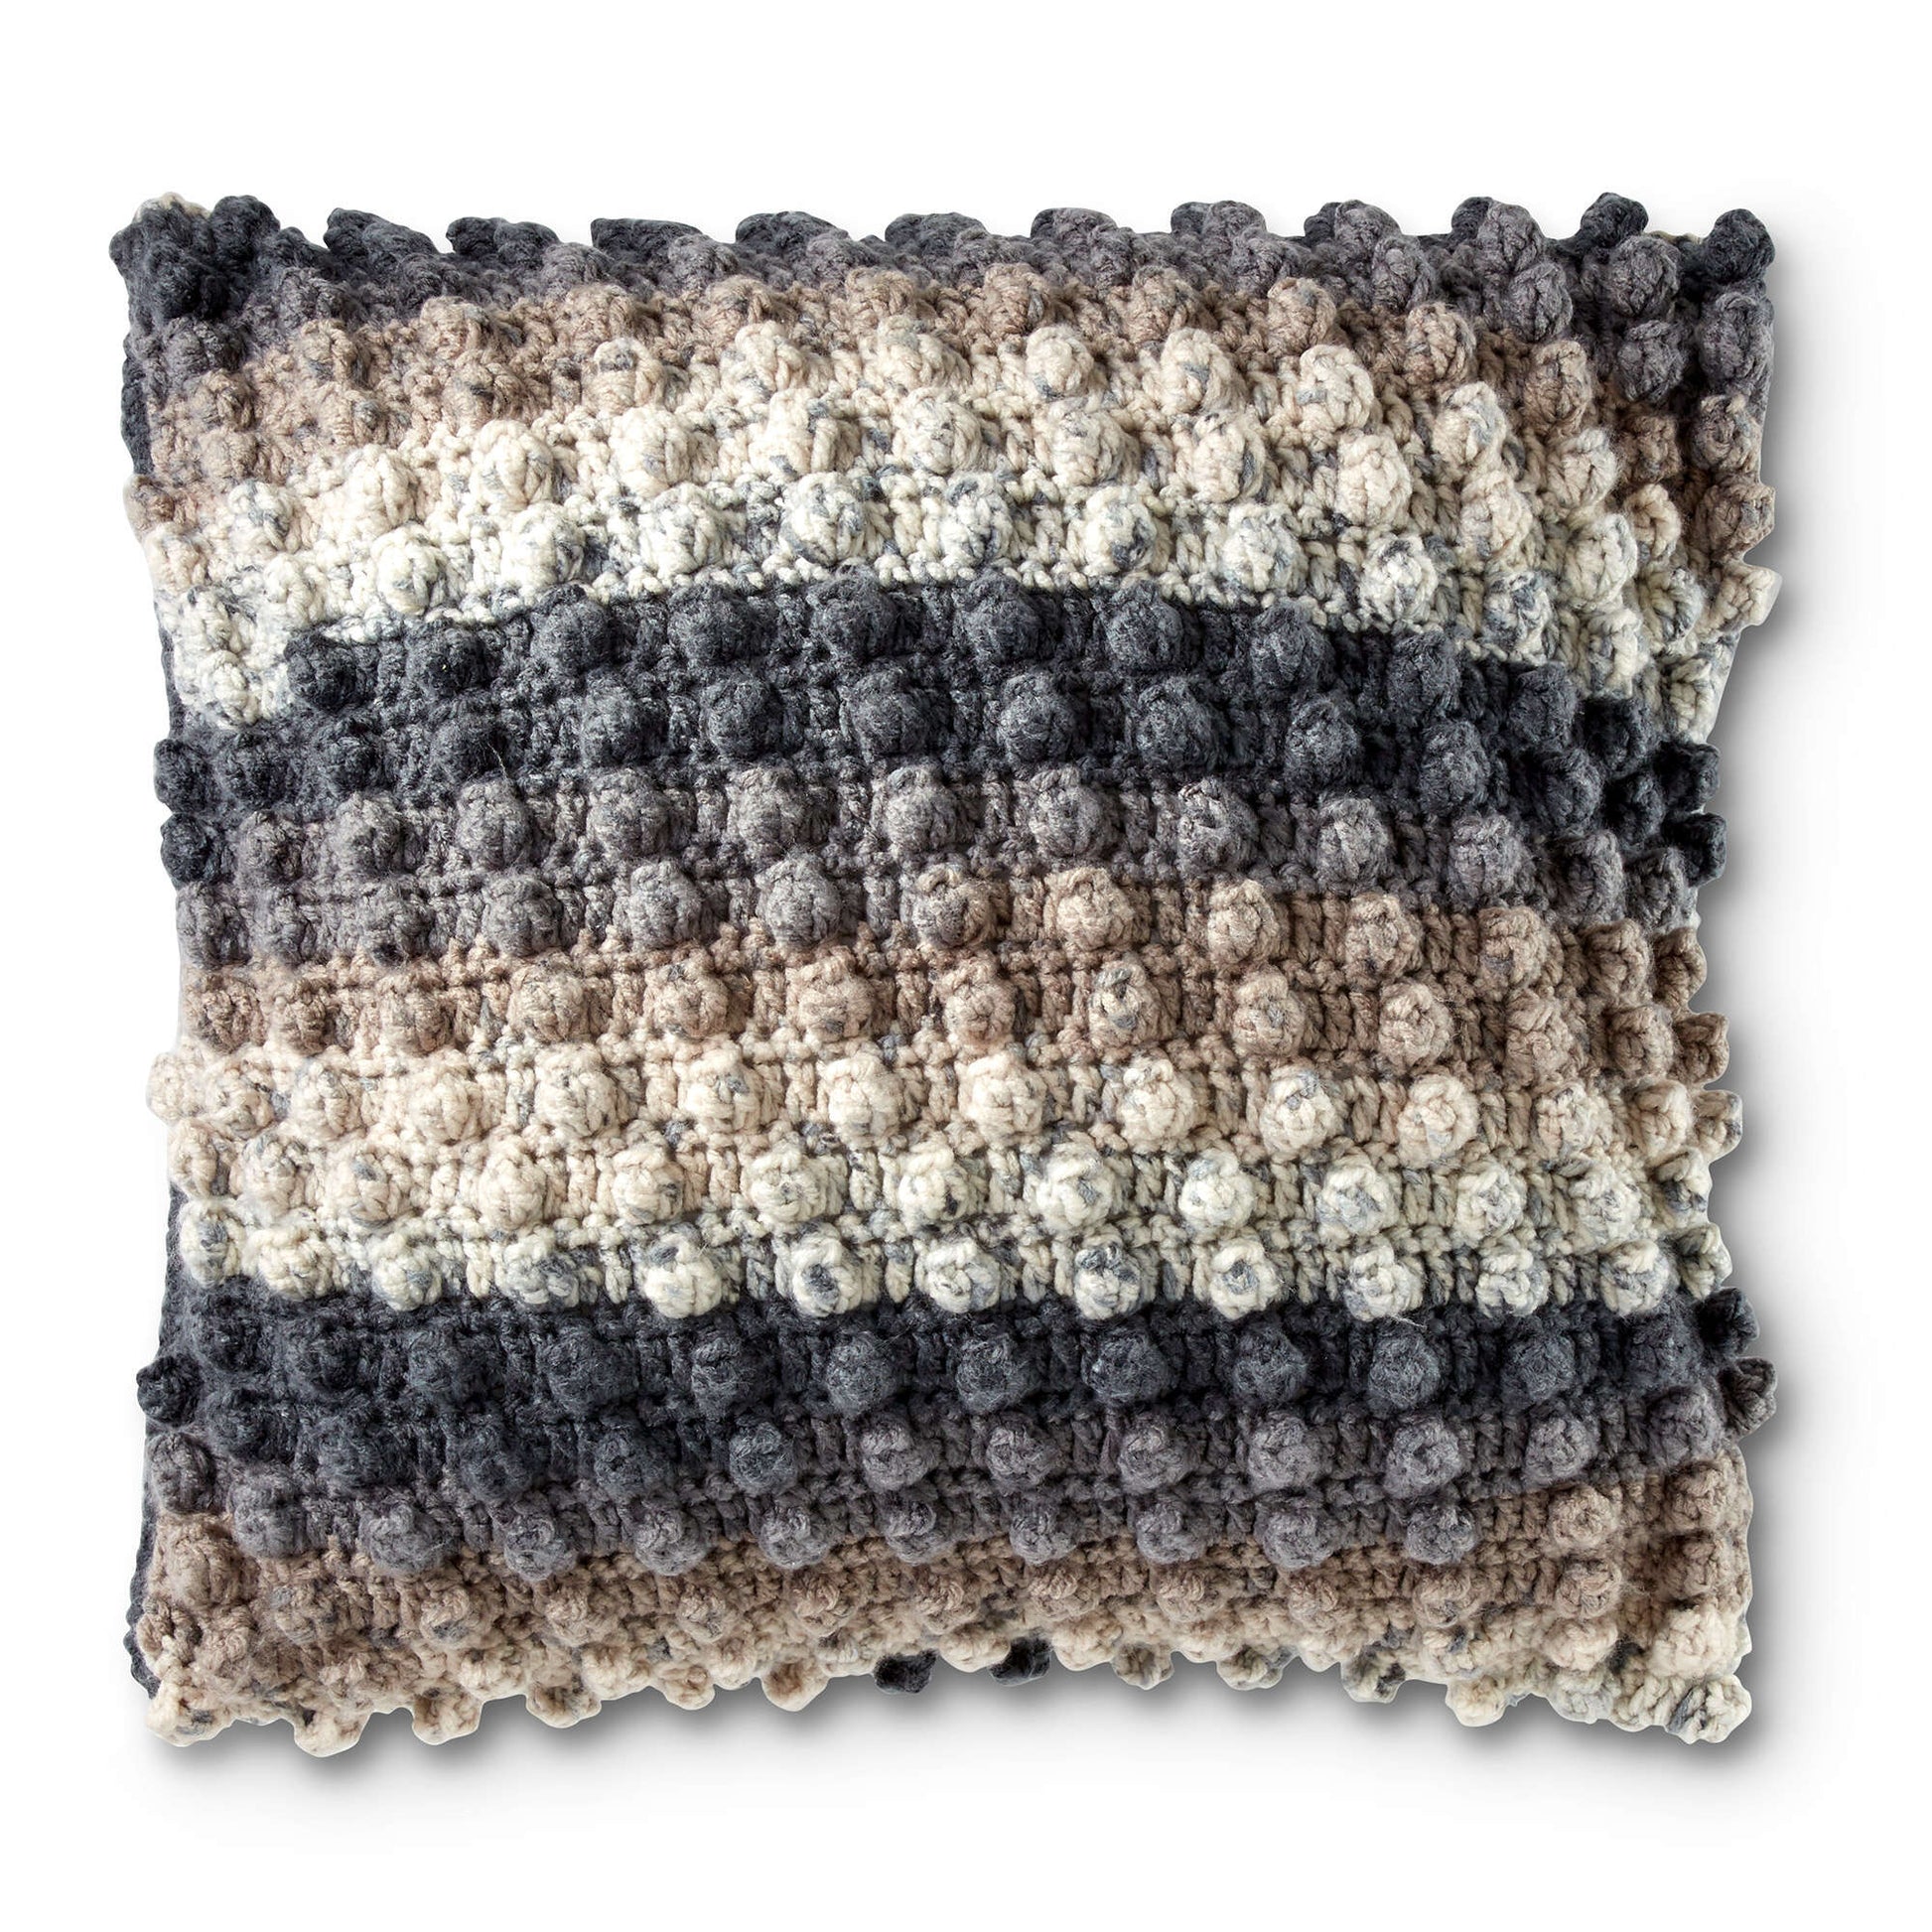 Free Caron Crochet Popcorn Pillow Pattern